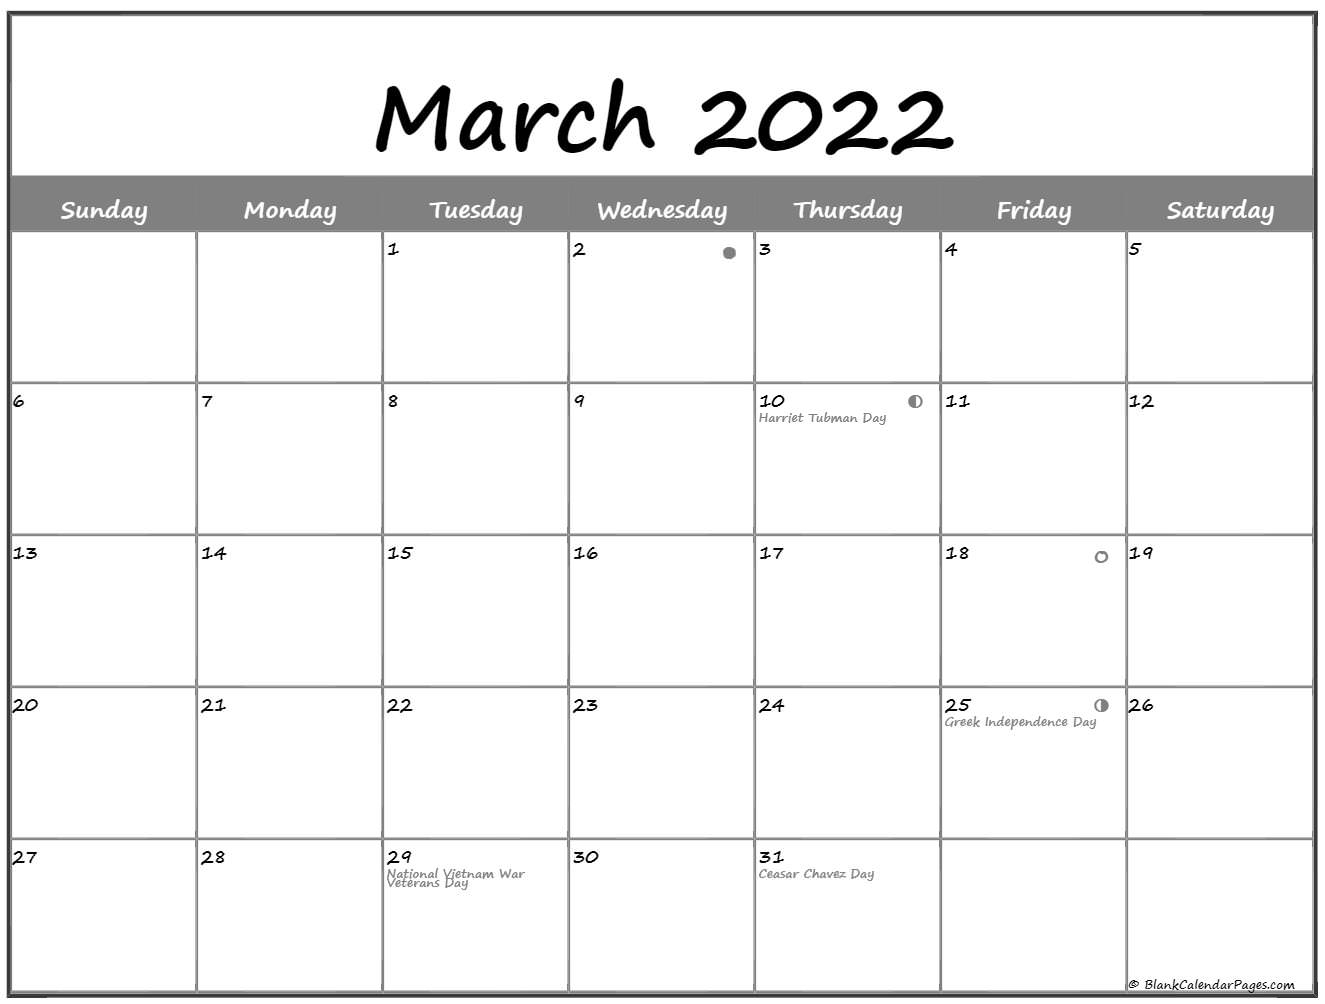 Catch March 2022 Calendar Image